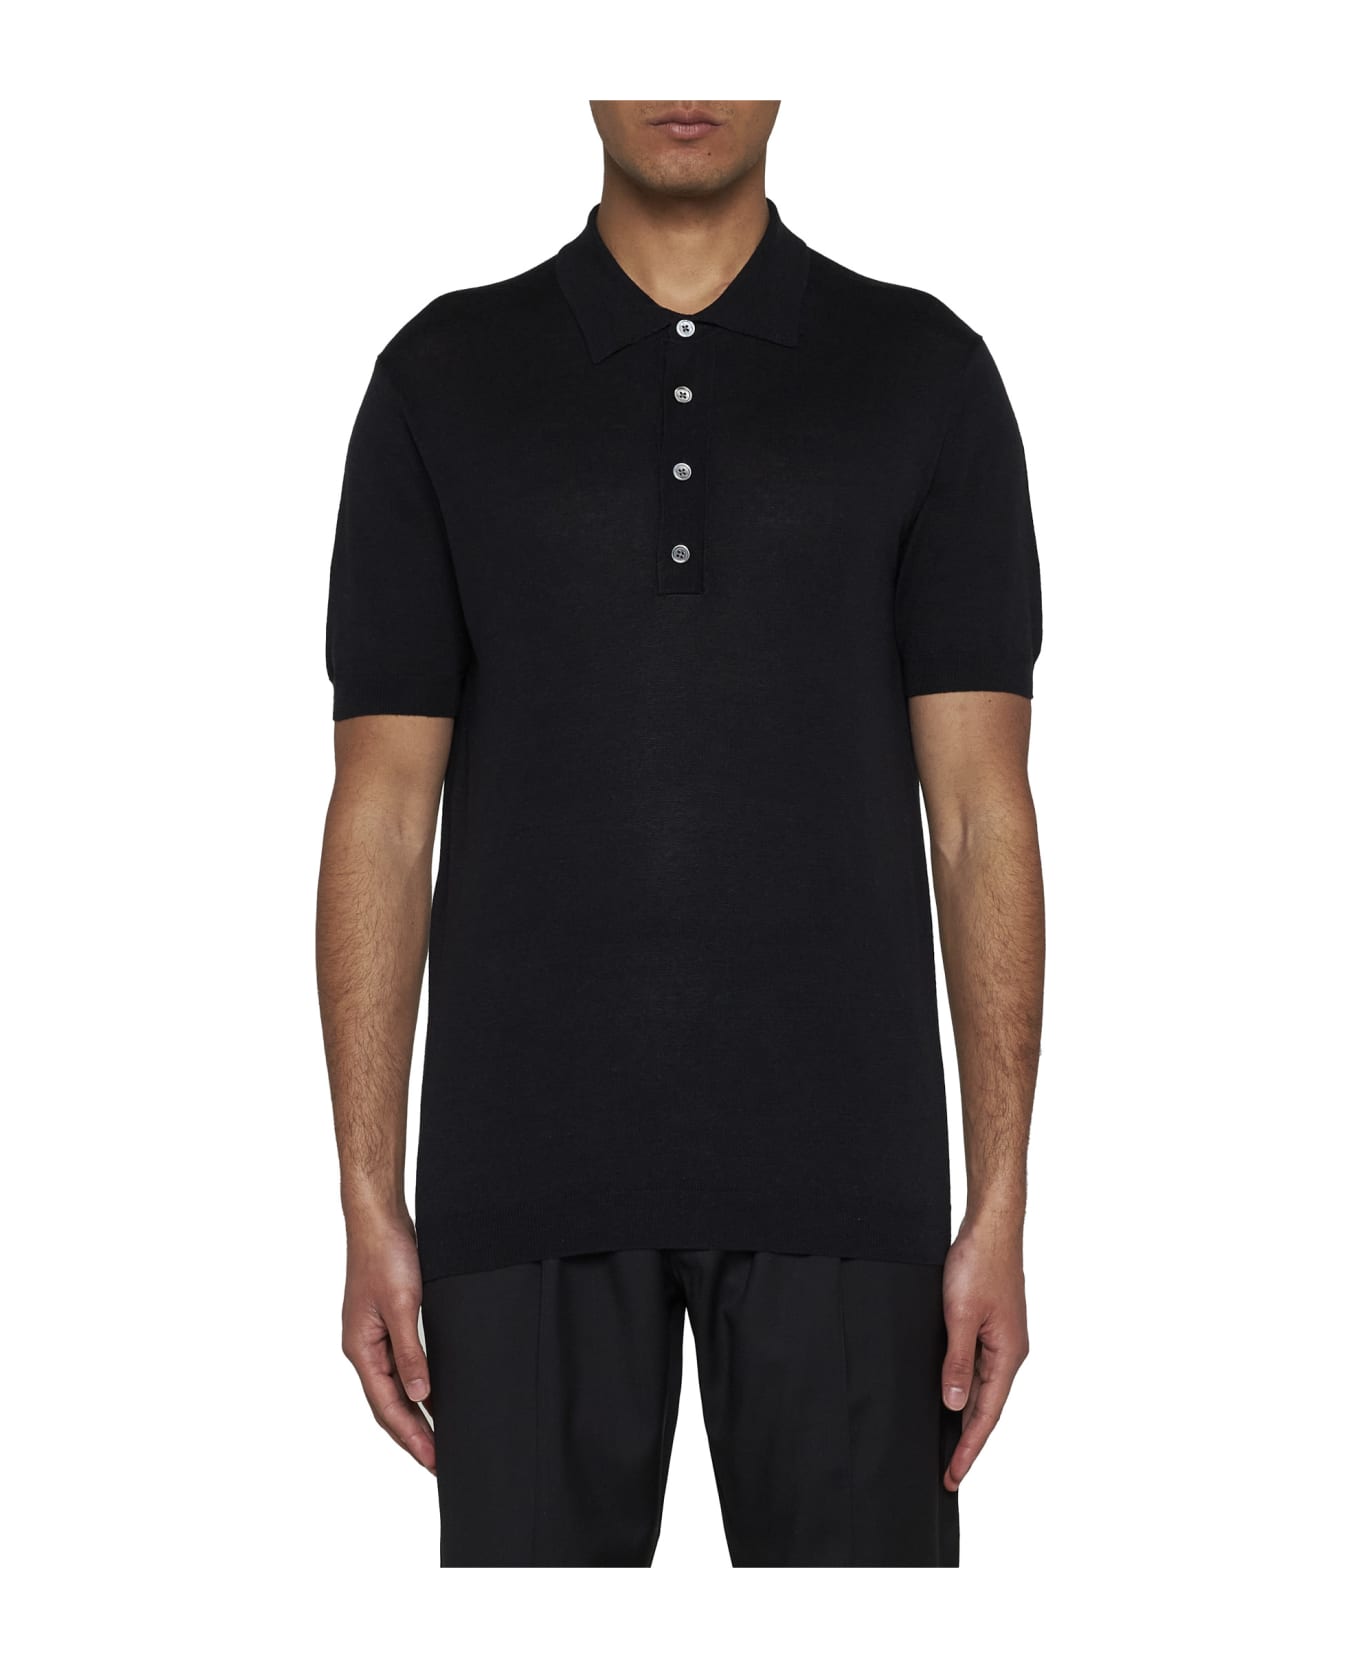 Low Brand Polo Shirt - Jet black ポロシャツ